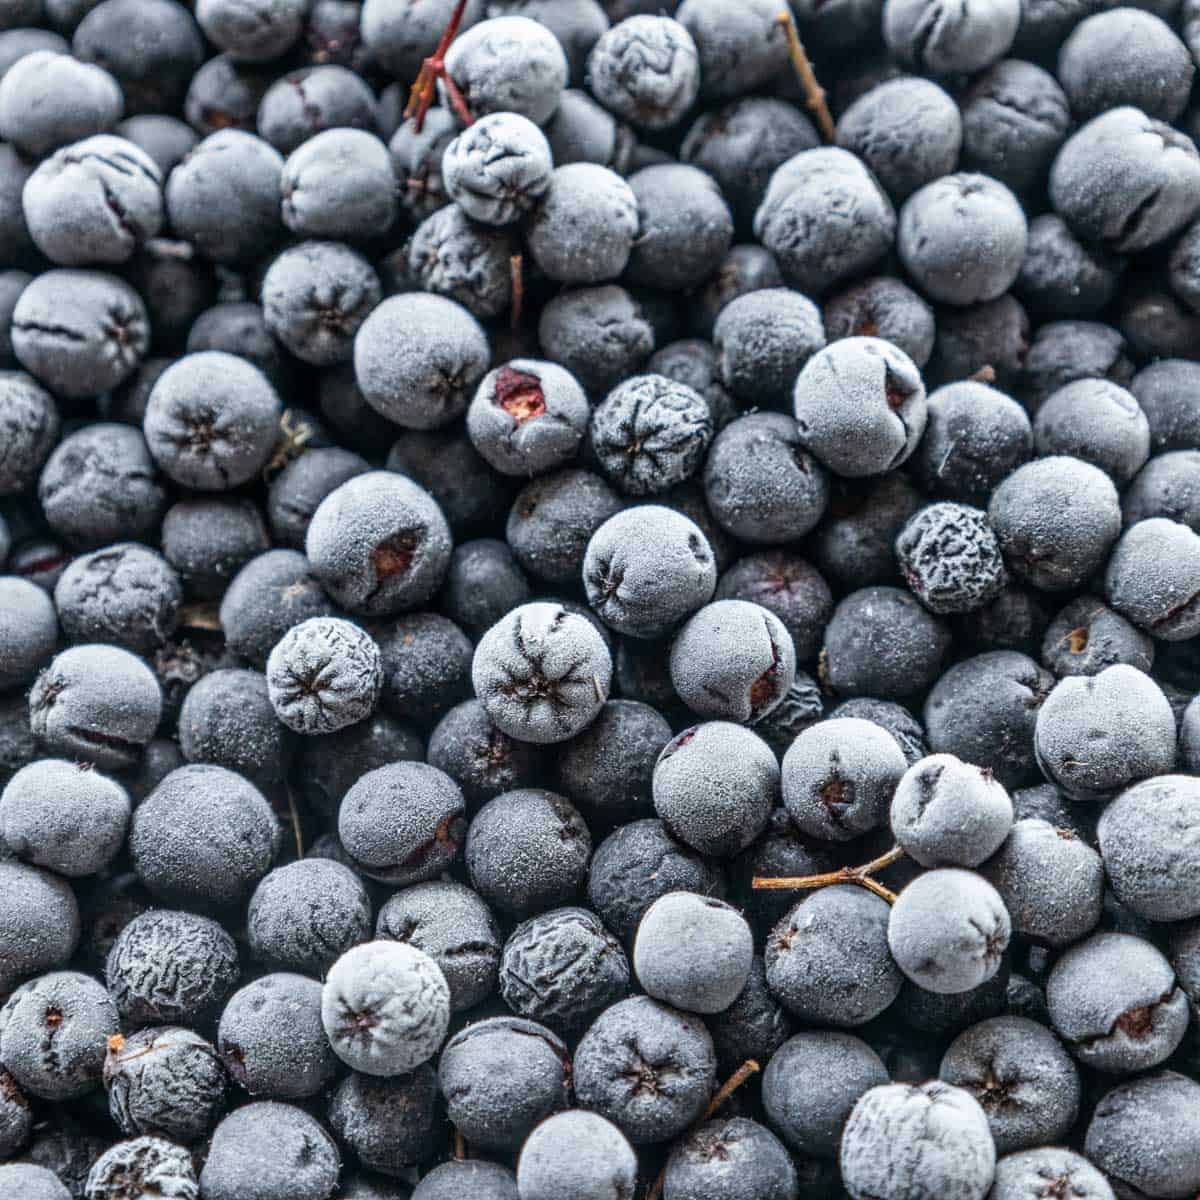 frozen IQF aronia berries or chokeberries